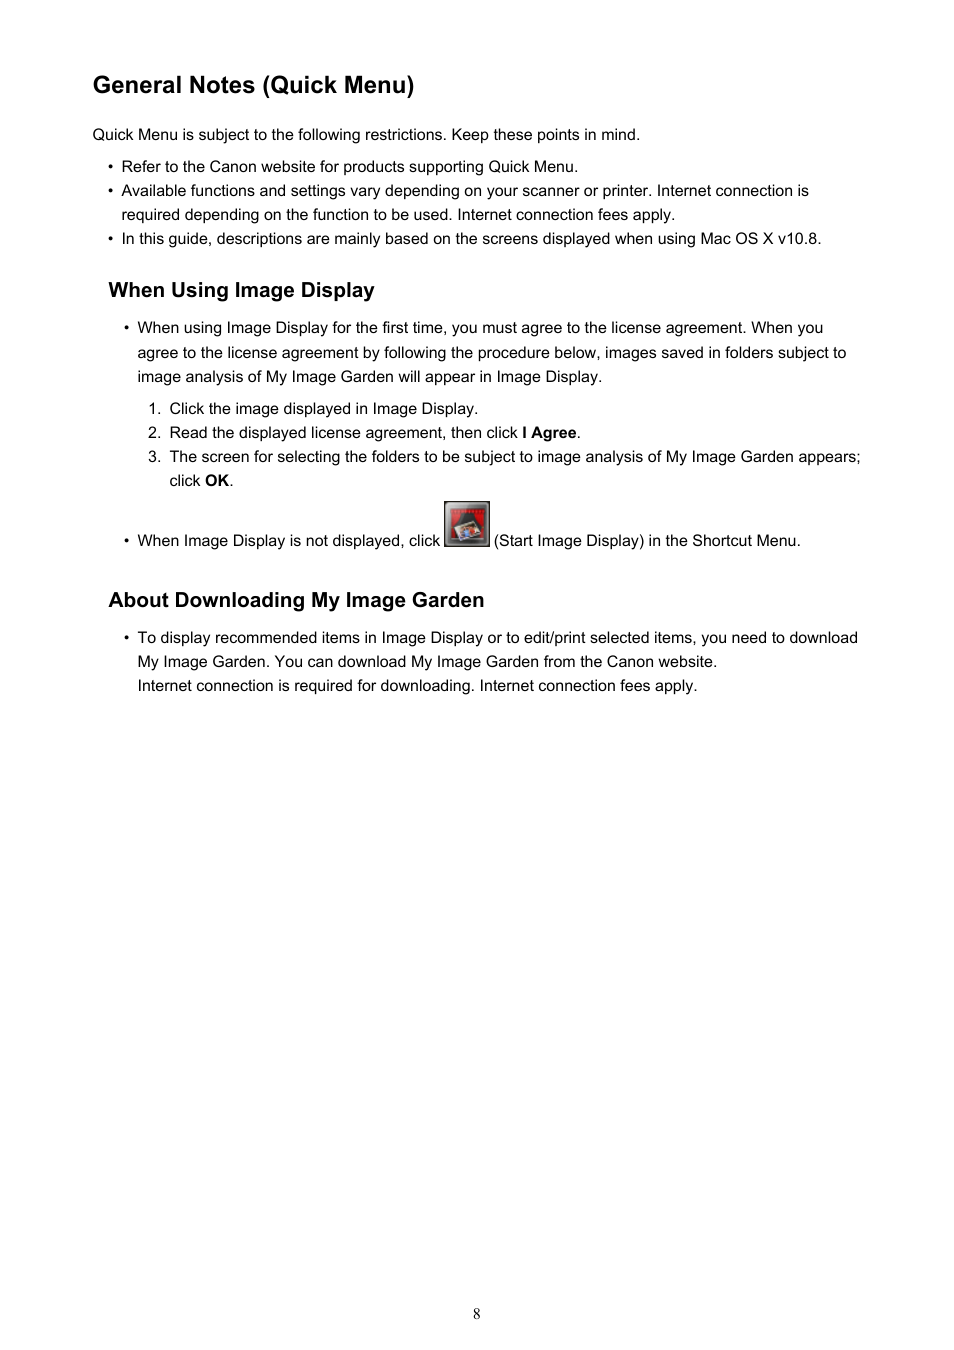 General notes (quick menu) | Canon PIXMA MG3550 User Manual | Page 8